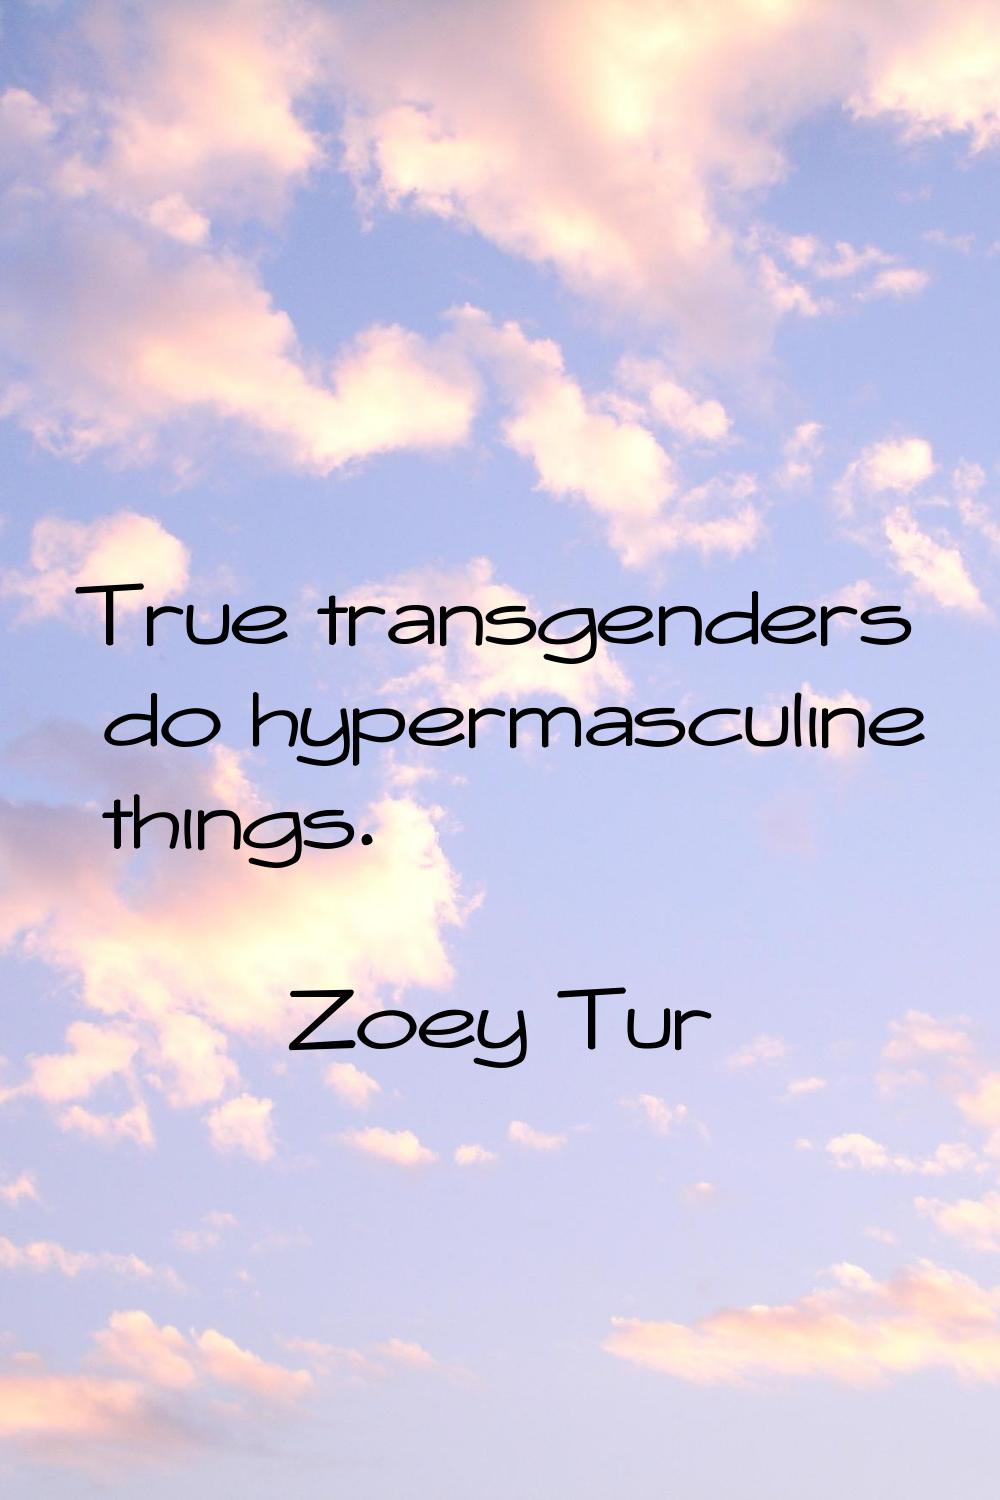 True transgenders do hypermasculine things.